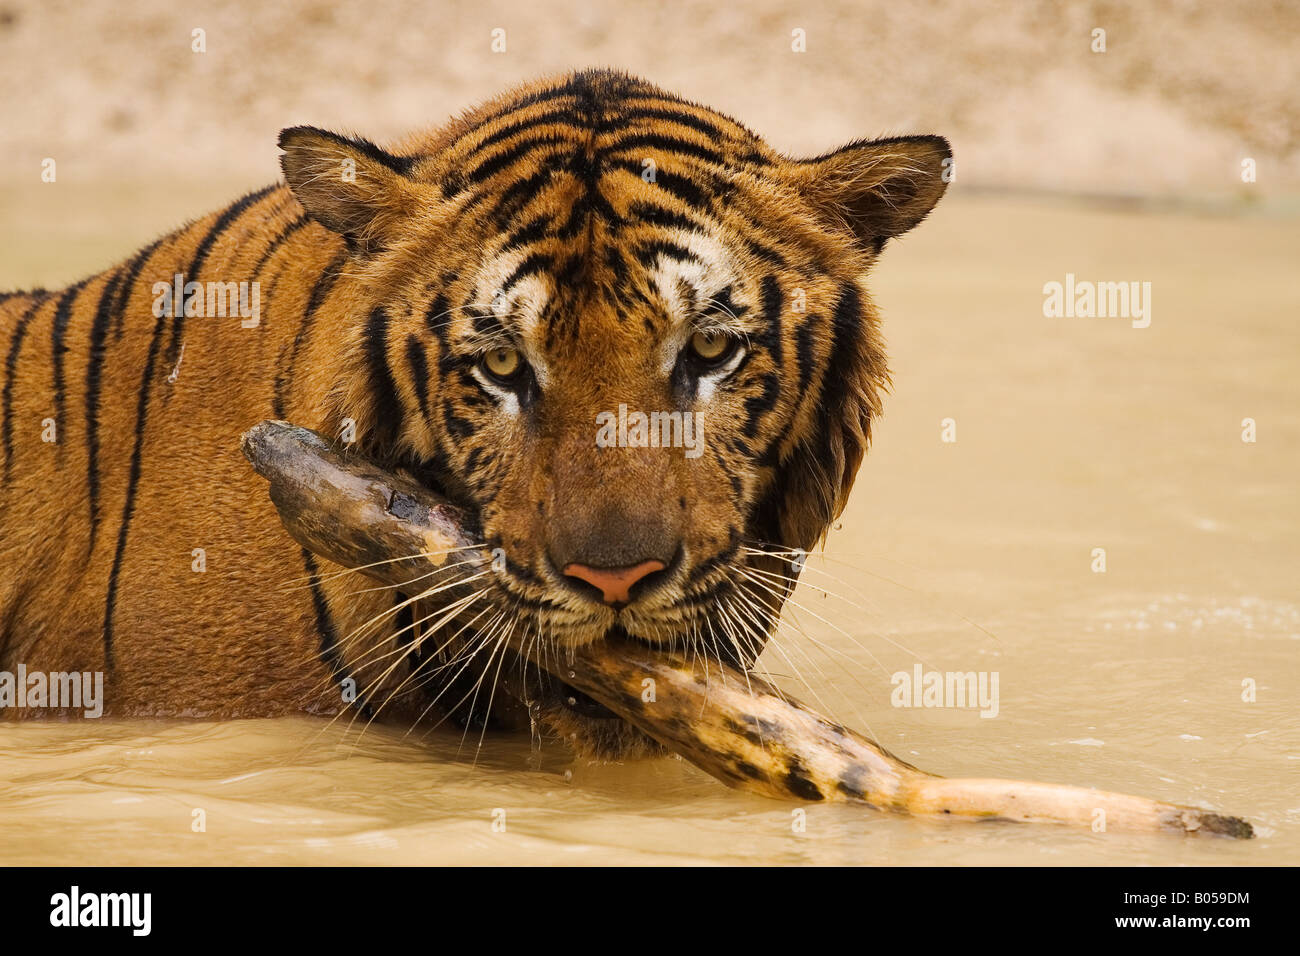 An Indo-Chinese male tiger Panthera tigris Stock Photo